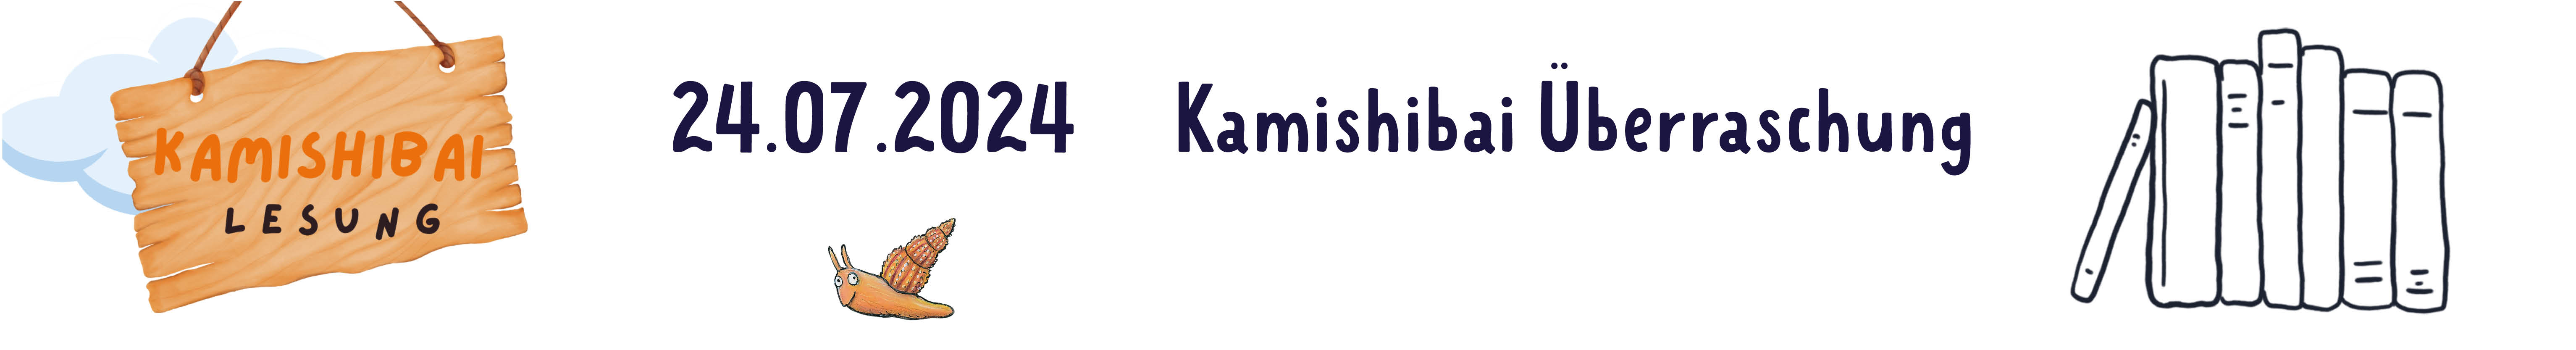 kamishibai